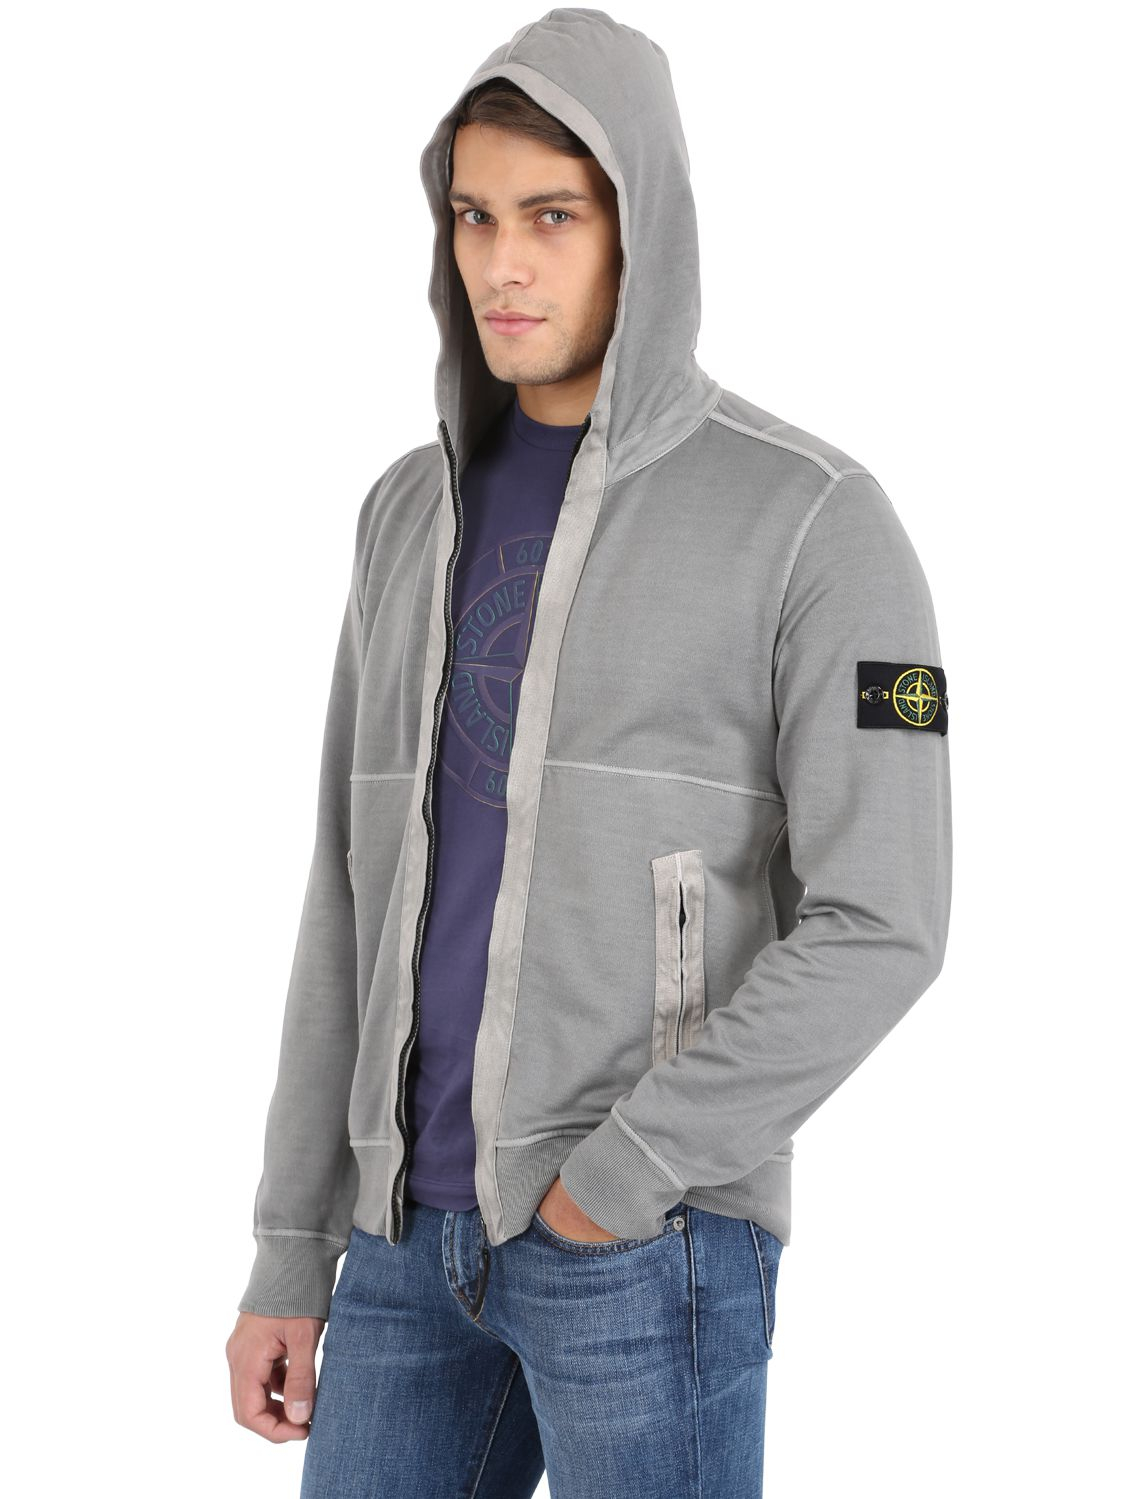 Stone Island Garment Dyed Light Fleece Zip Sweatshirt in Grey (Gray) for  Men - Lyst